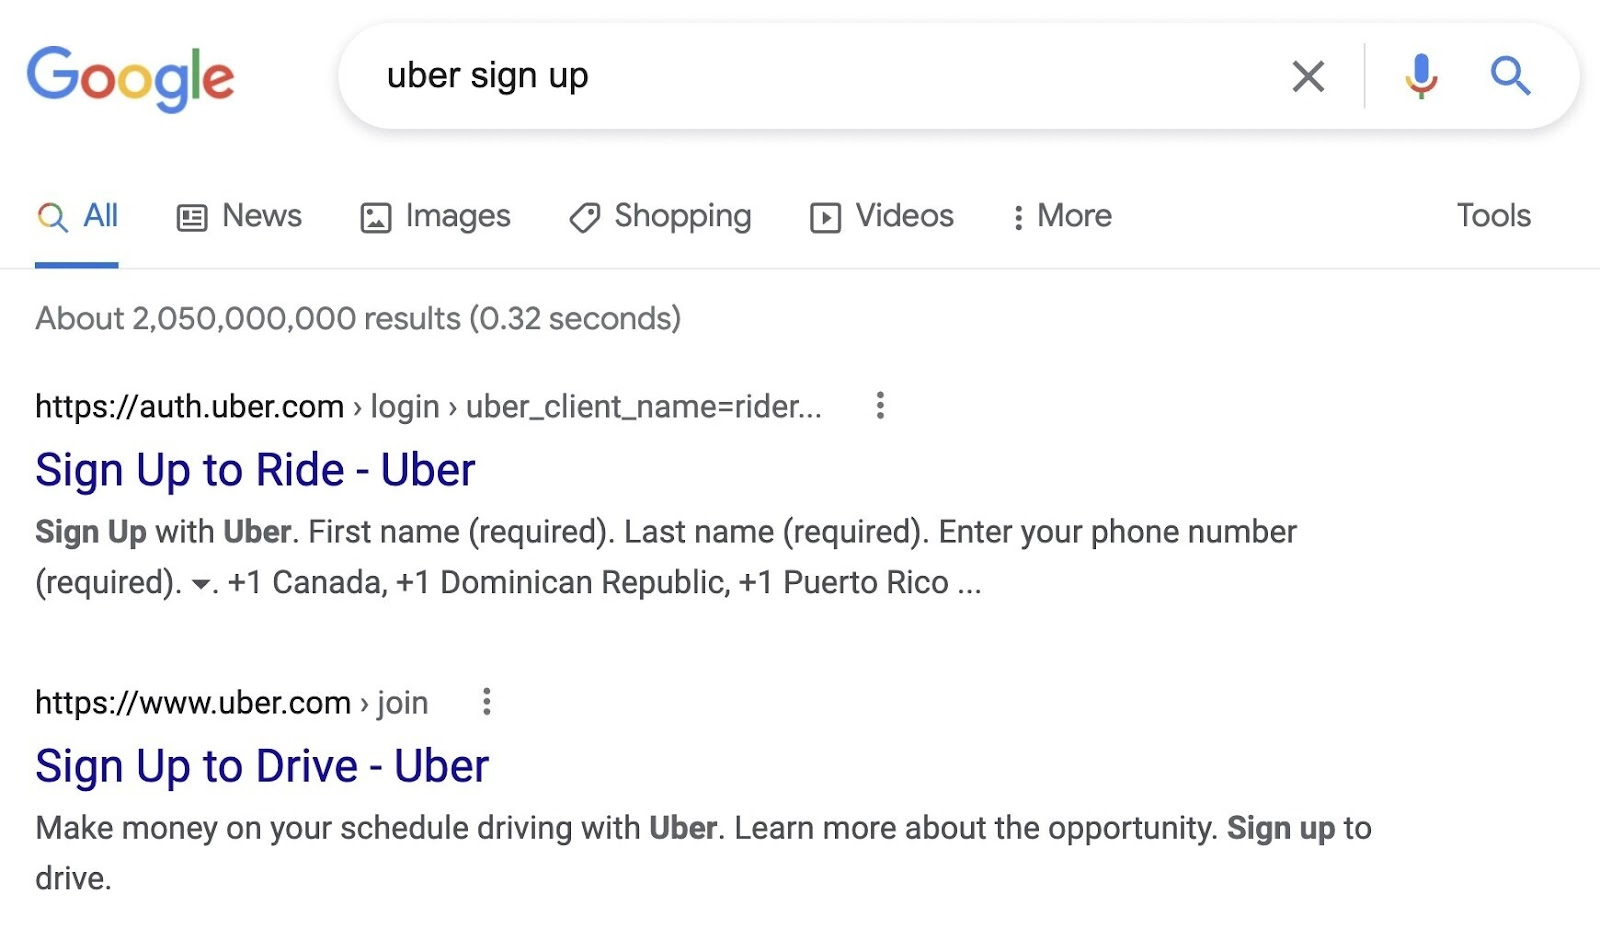 Google SERP for “Uber sign up”